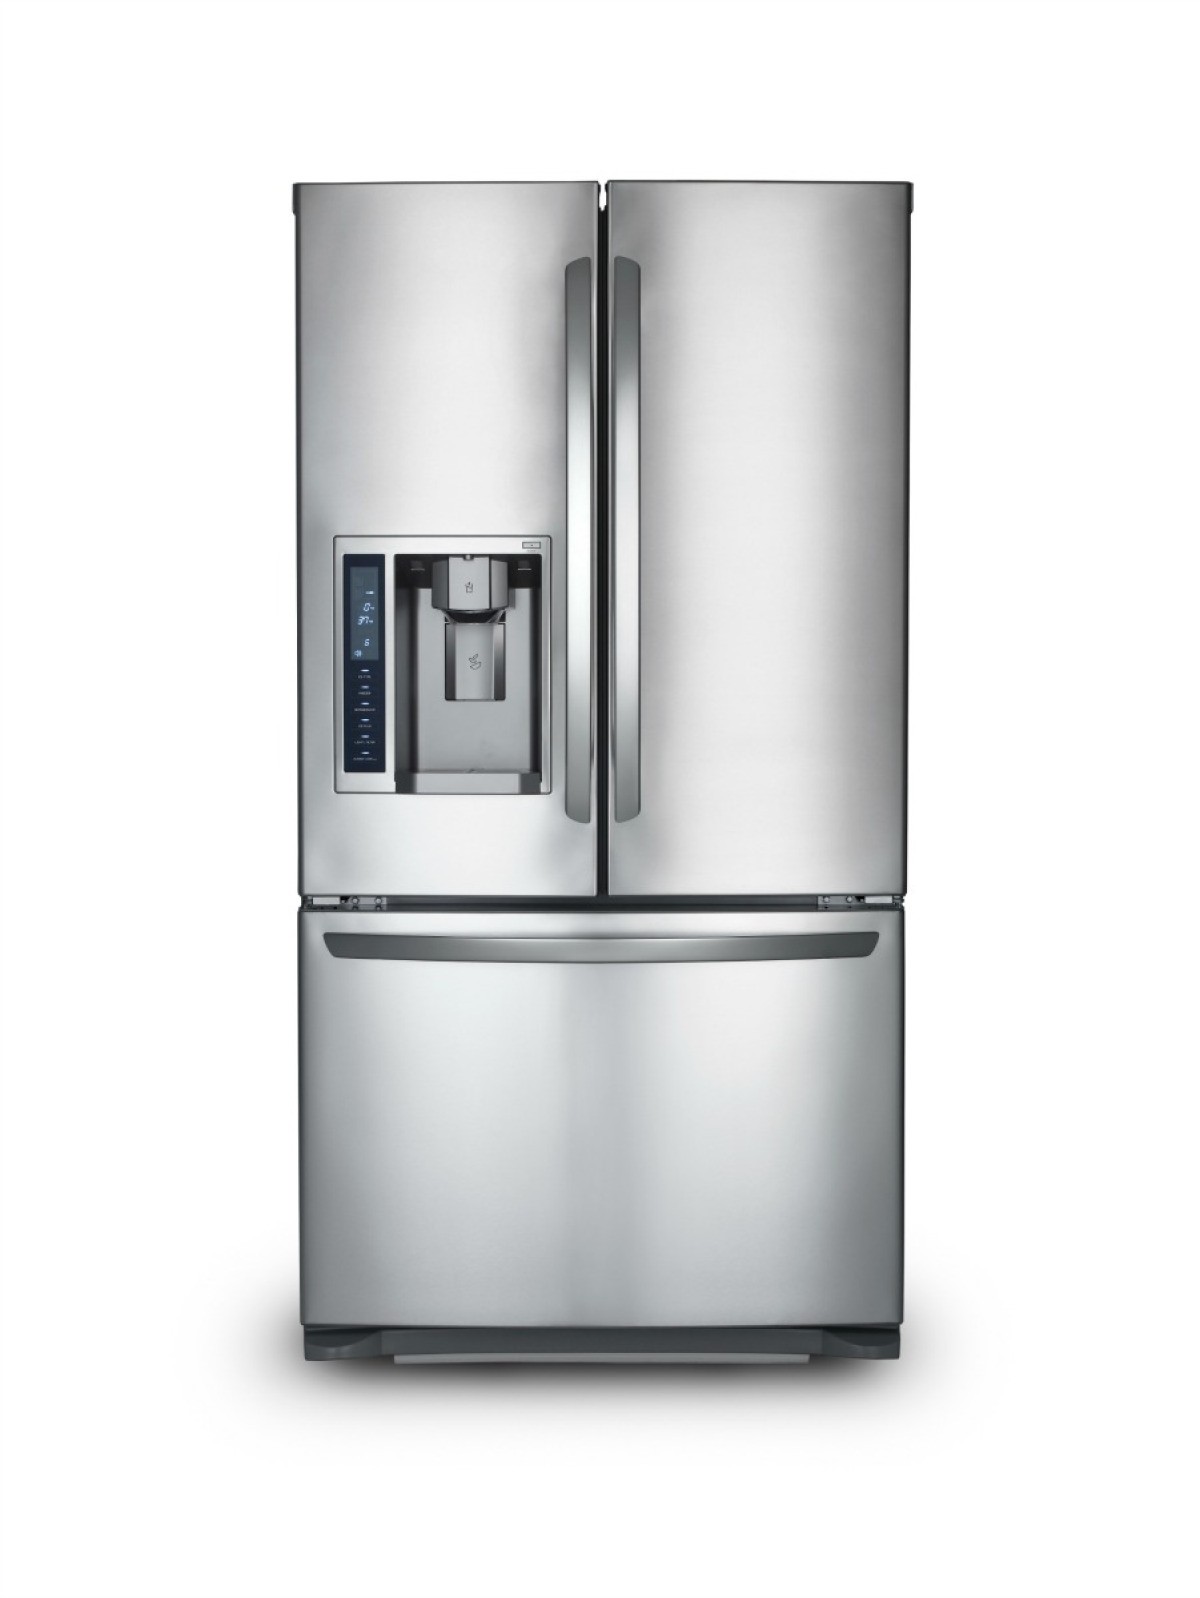 Removing a Refrigerator Drain Pan? | ThriftyFun